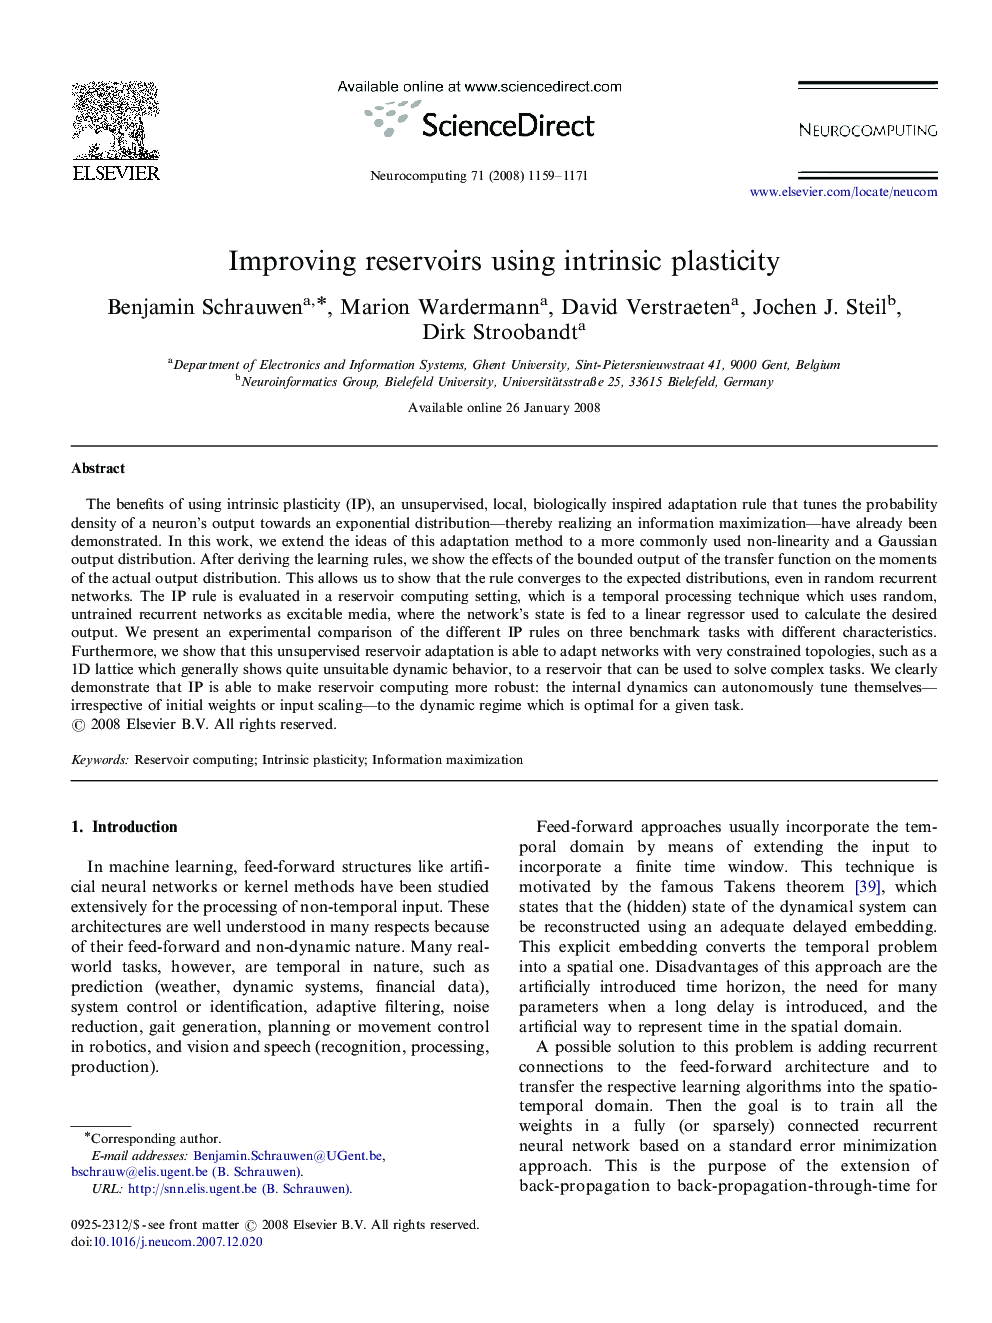 Improving reservoirs using intrinsic plasticity